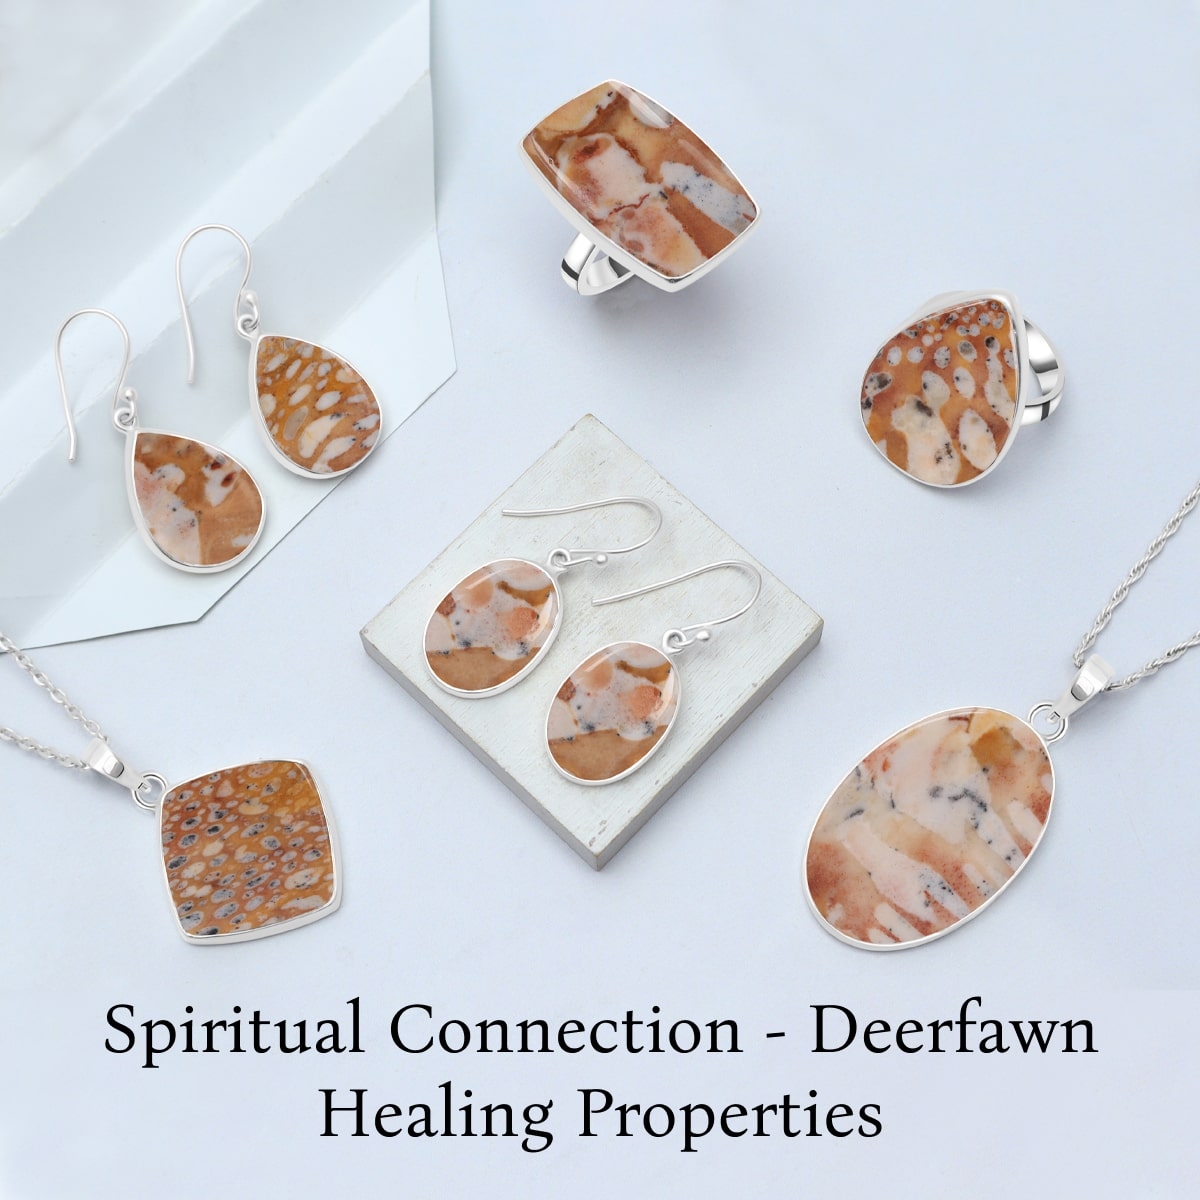 Deerfawn Healing and Metaphysical Properties